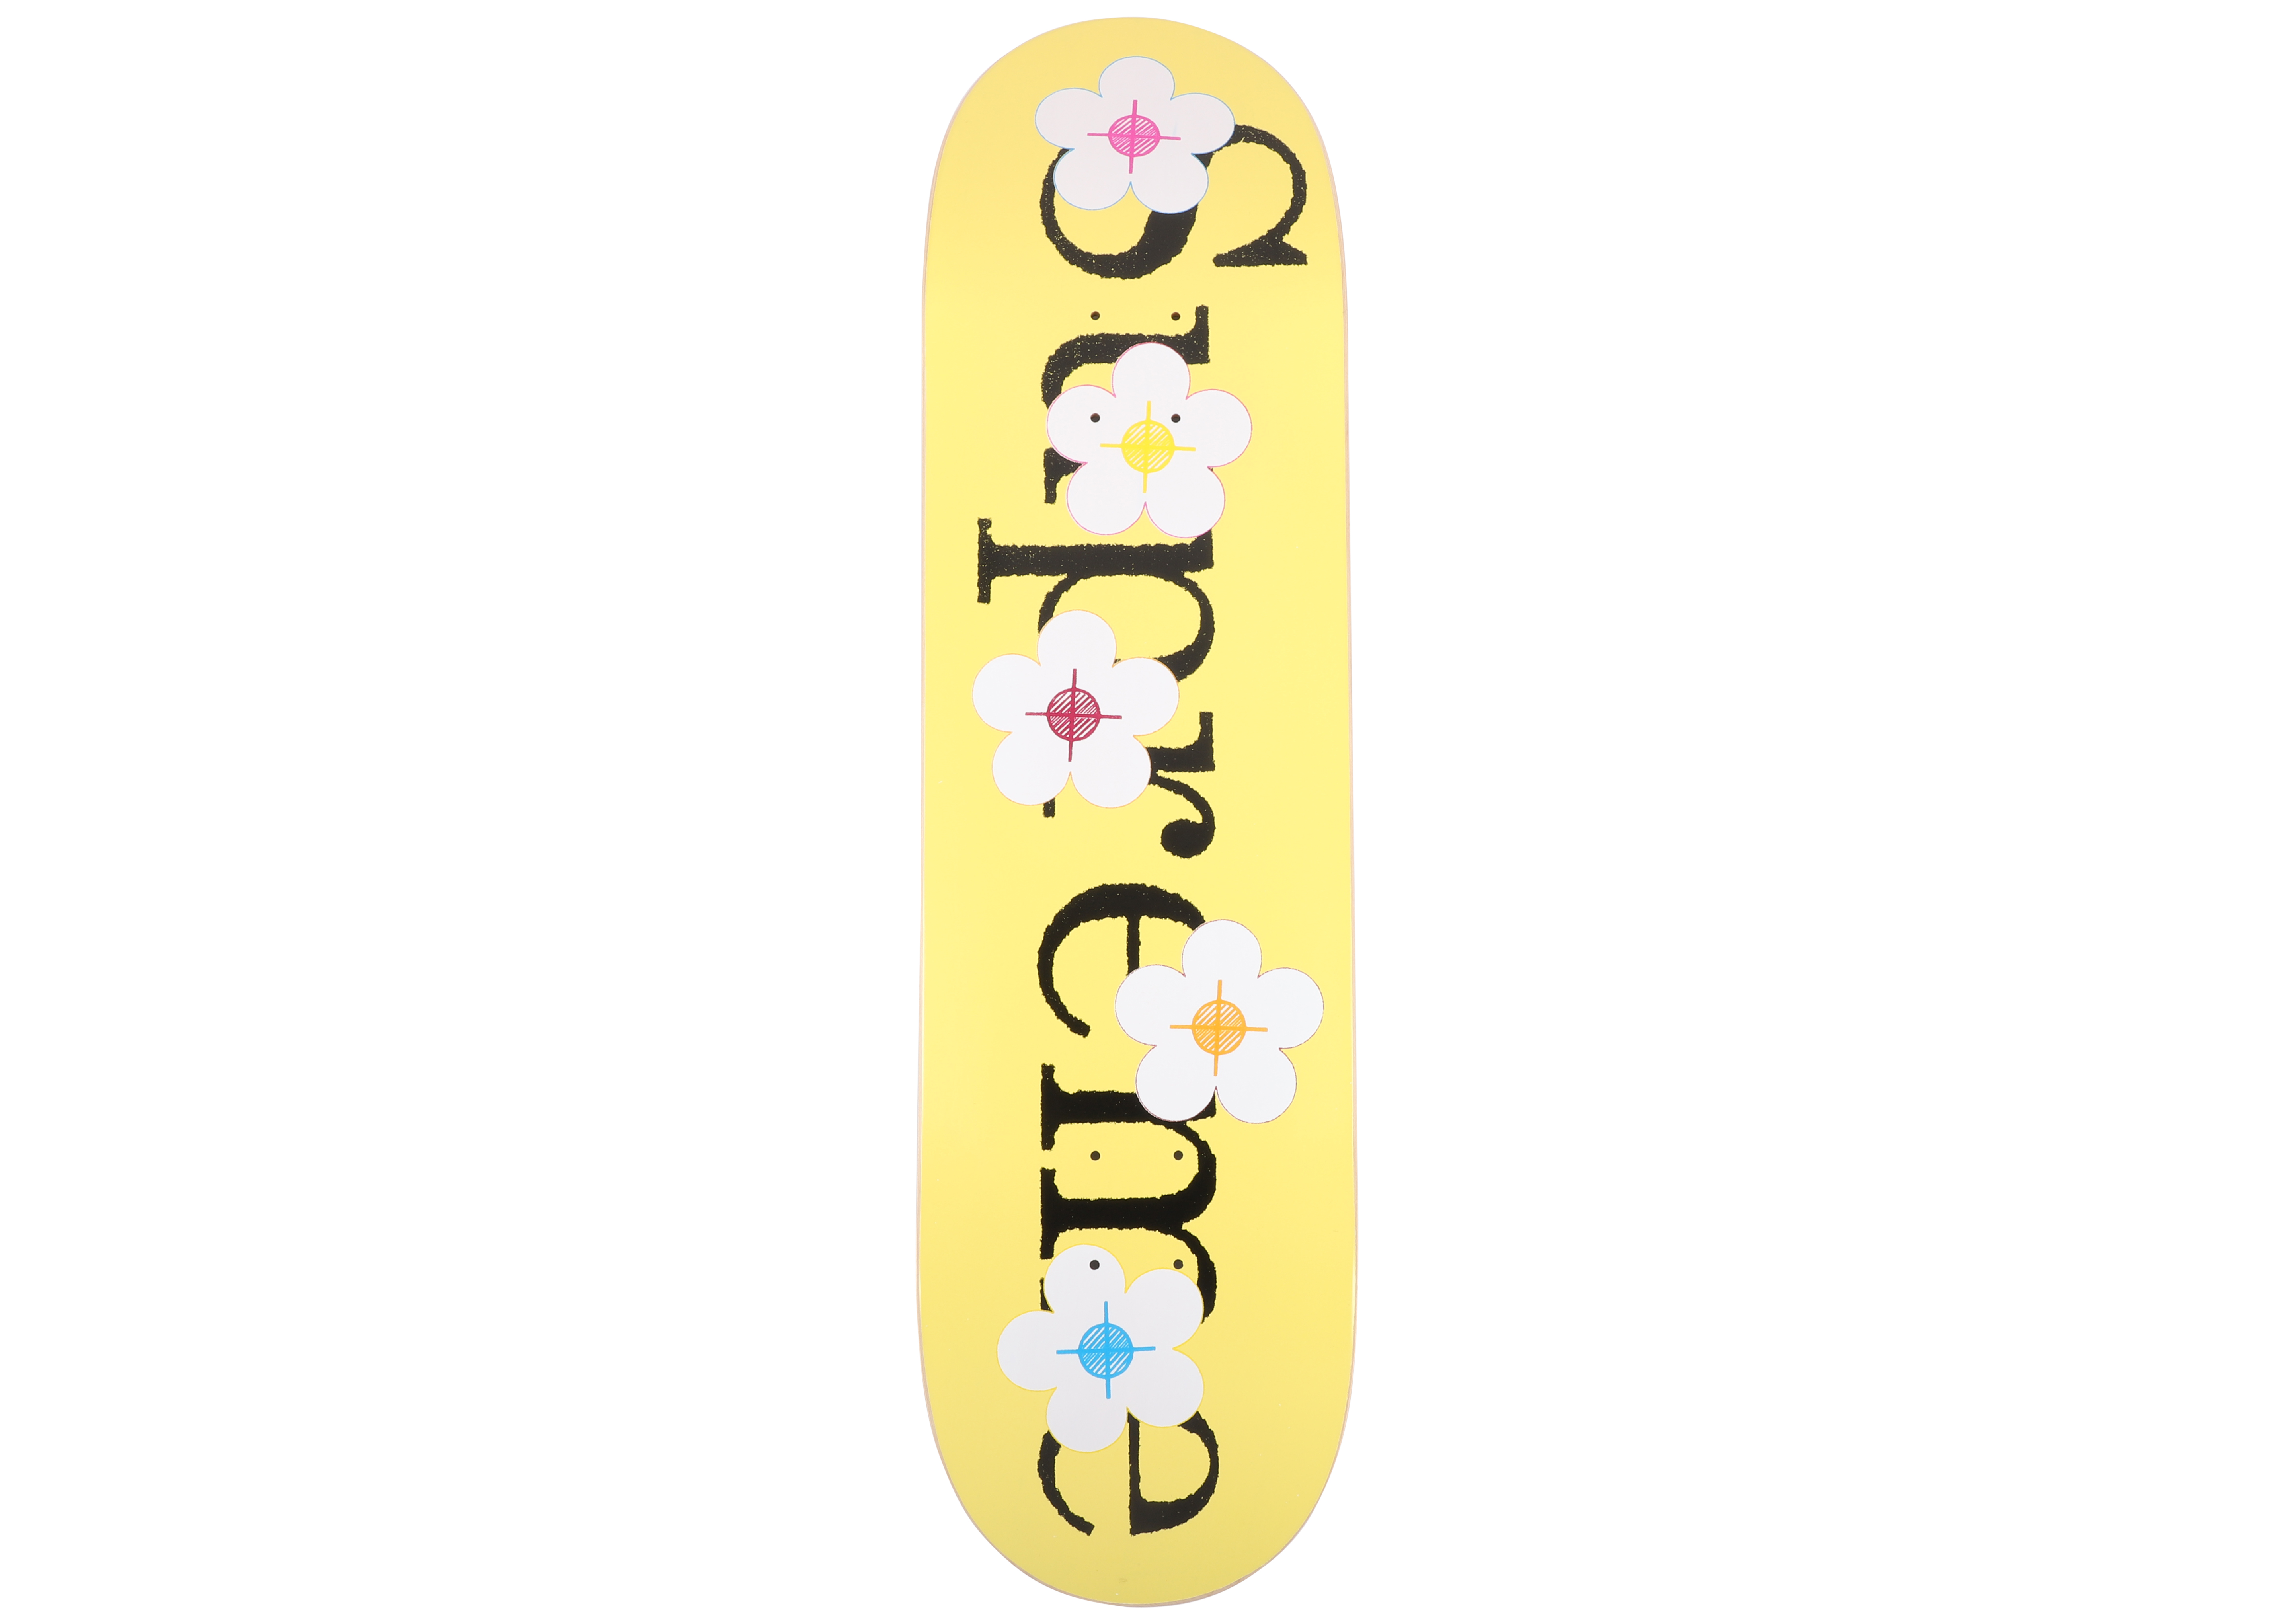 Supreme Flowers Skateboard Deck Black - SS17 - US